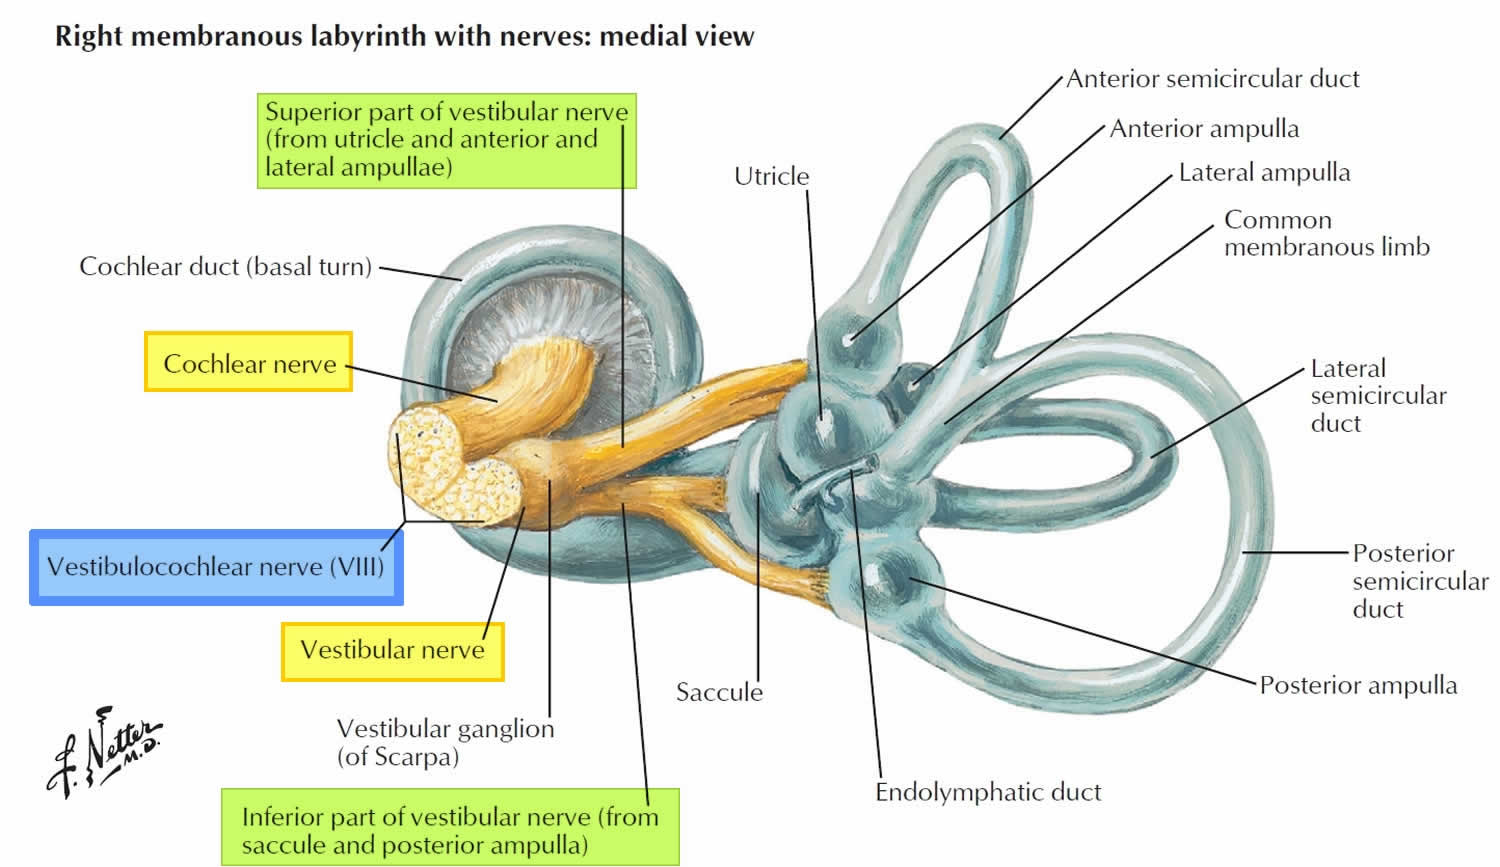 Vestibulocochlear nerve branches